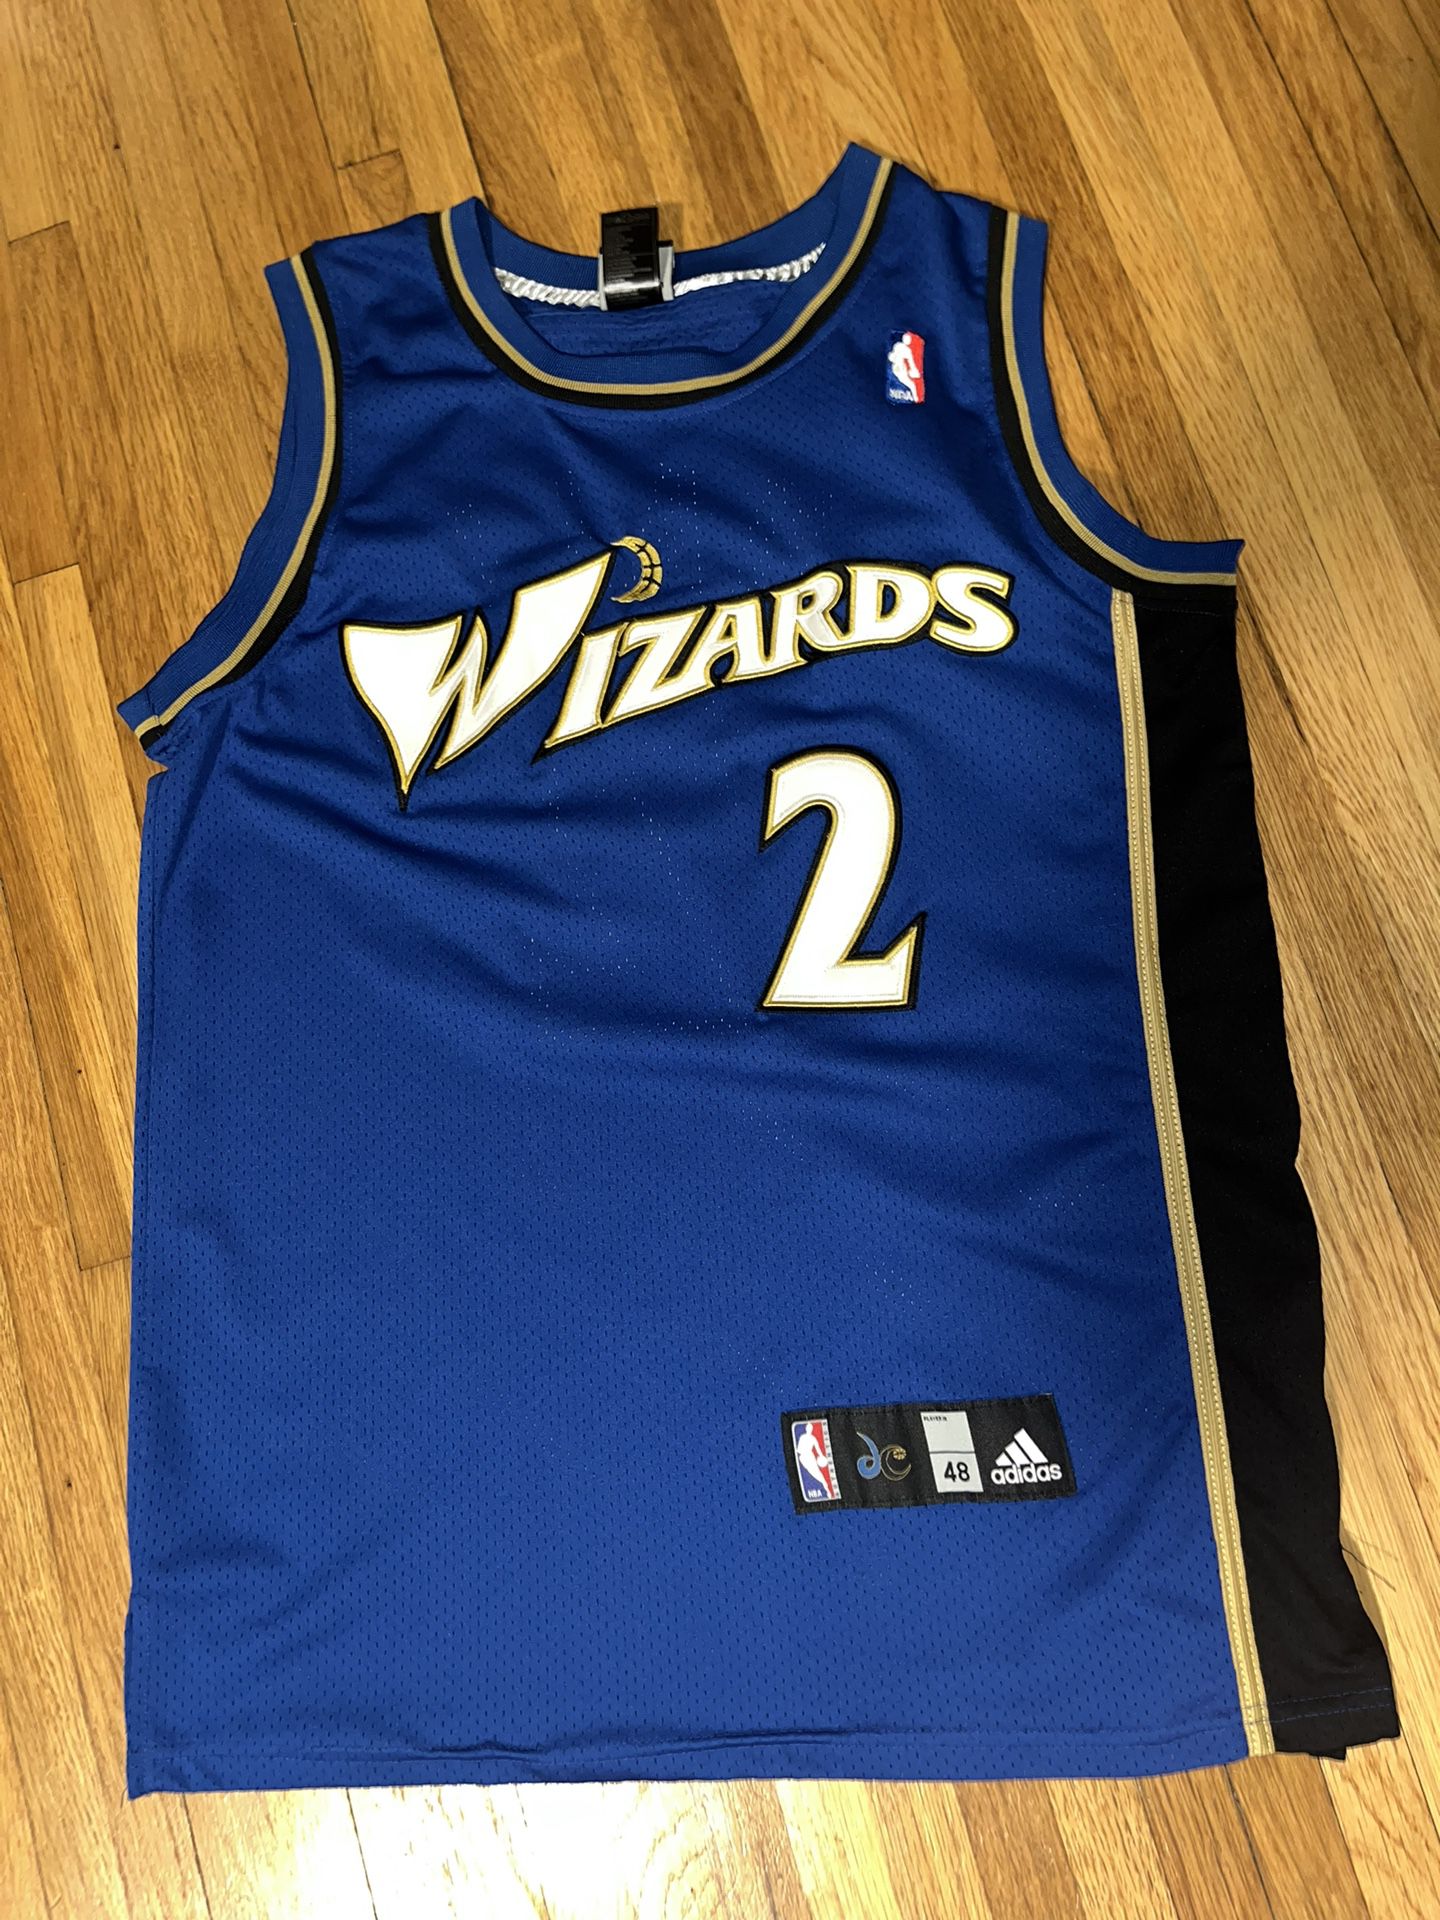 Wall Adidas Jersey Adult Size 50 Blue Black Washington Wizards DC NBA Sewn Mens.